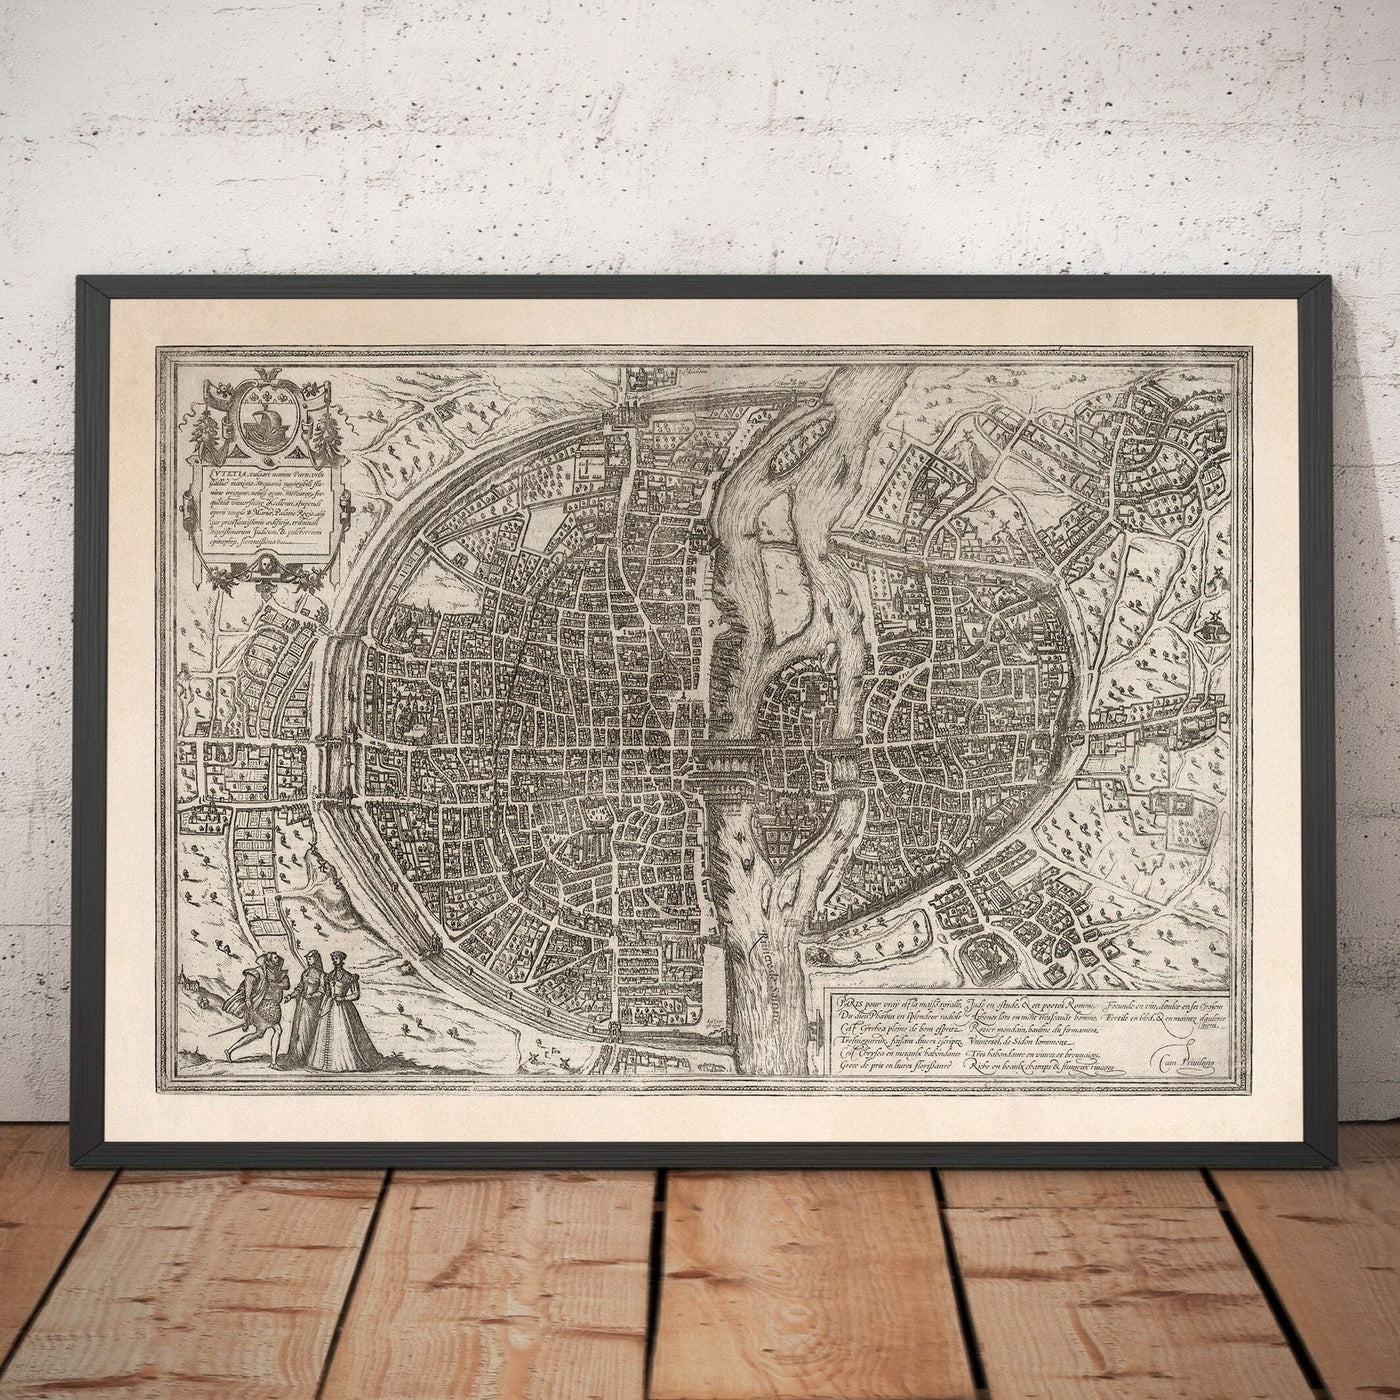 Old Monochrome Map of Paris, 1572 by Braun - Notre Dame, Sainte Chapelle, Bastille, Seine, Cathedral, City Walls